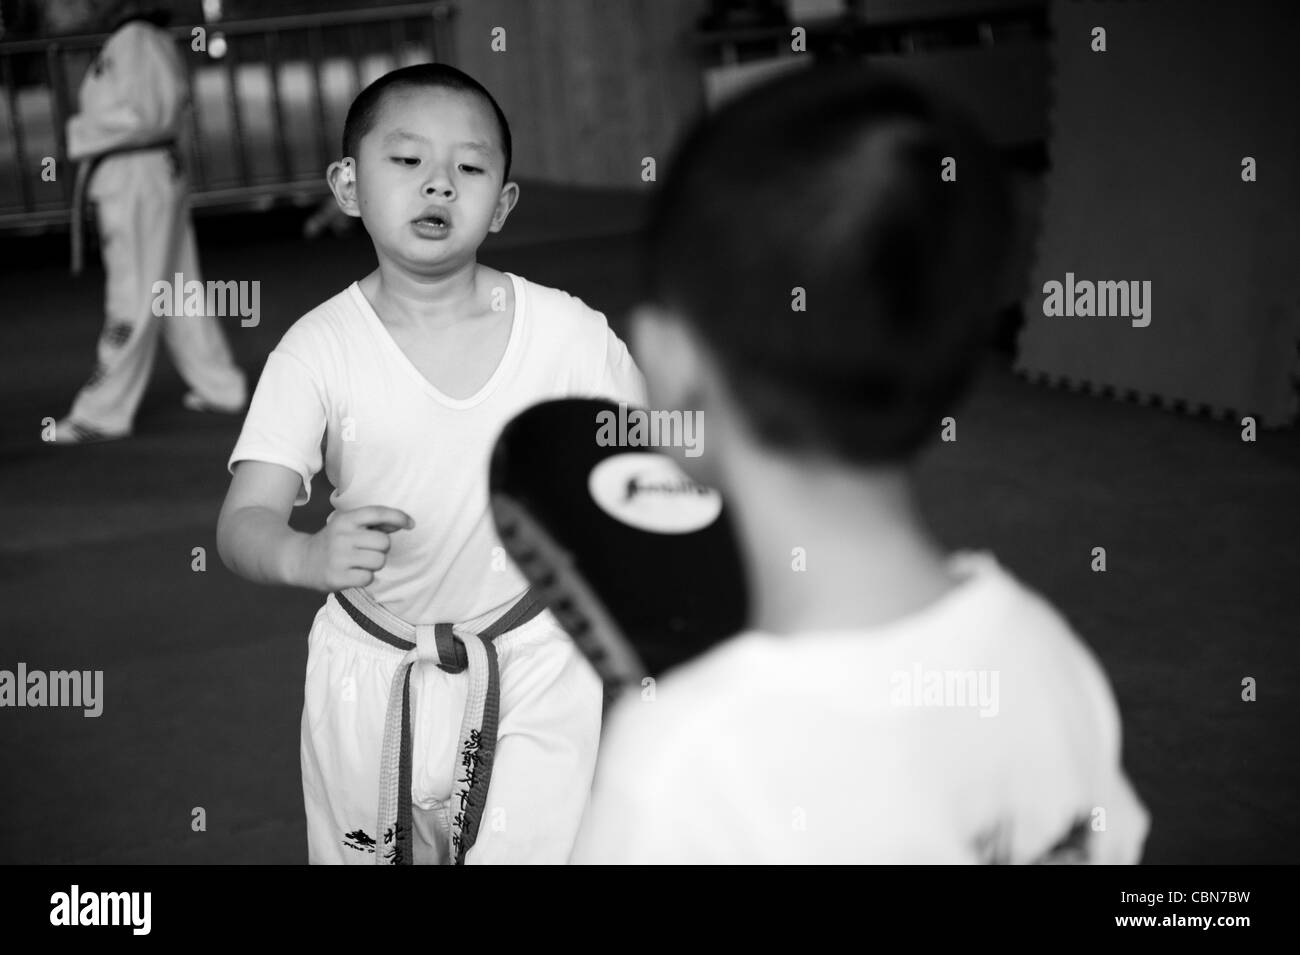 Taekwondo training class at the BoTao Taekwondo School in the Chaoyang Gymnasium, Beijing Stock Photo